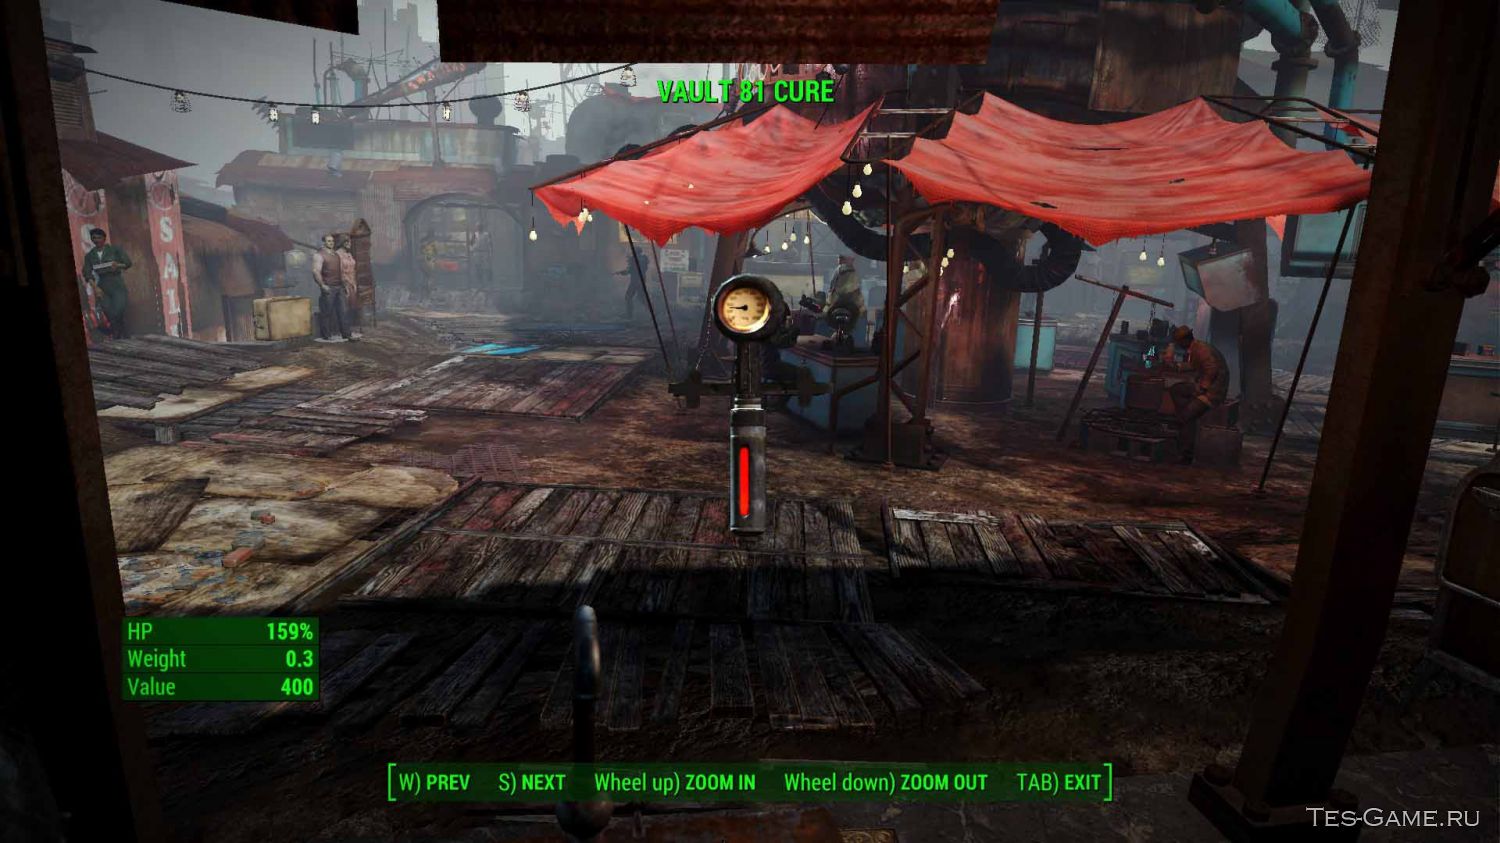 Fallout 4 vault 81 cure фото 4